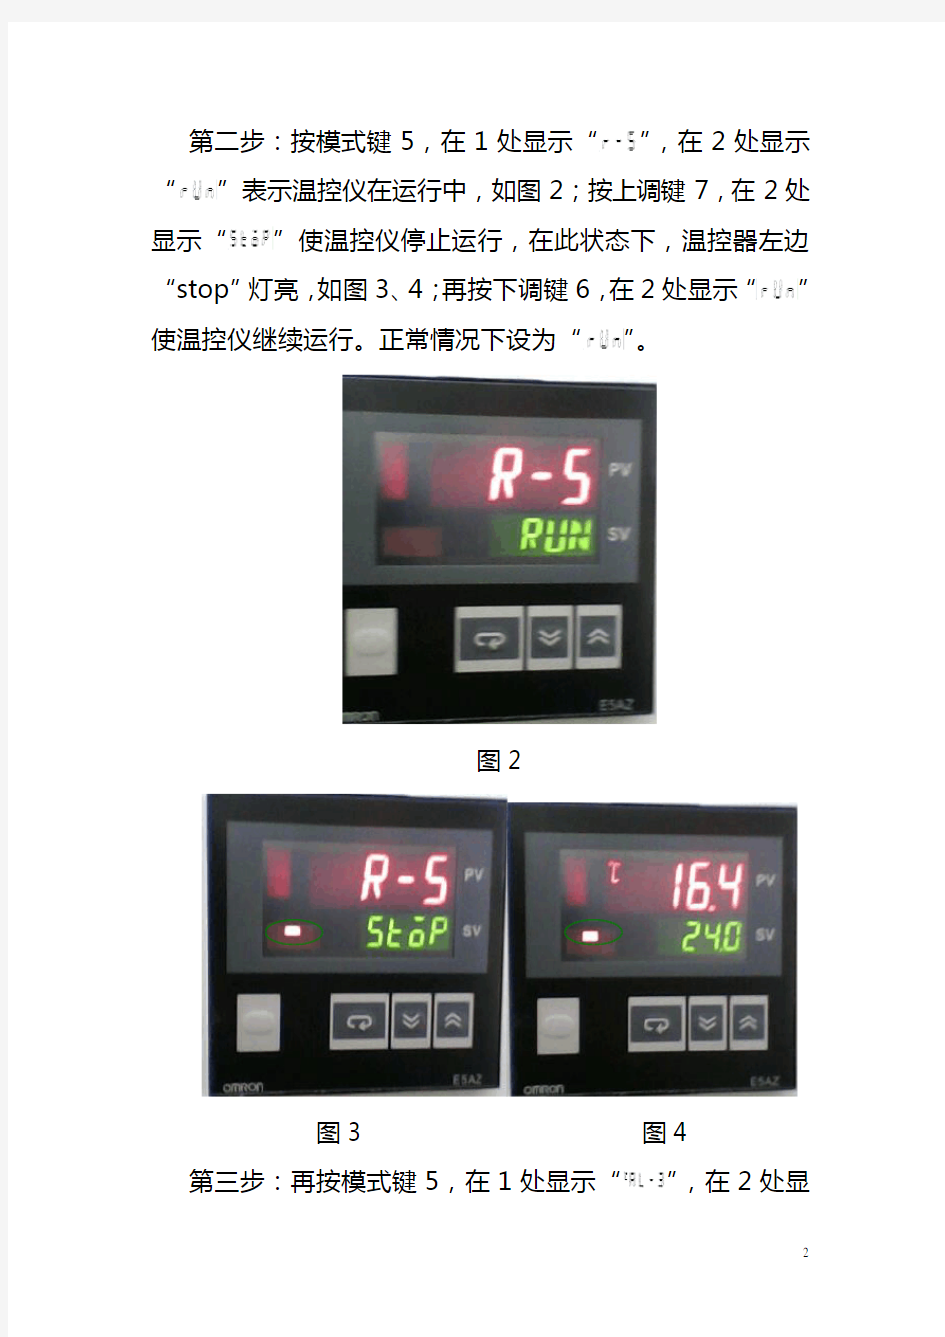 E5AZ温控器简单操作说明